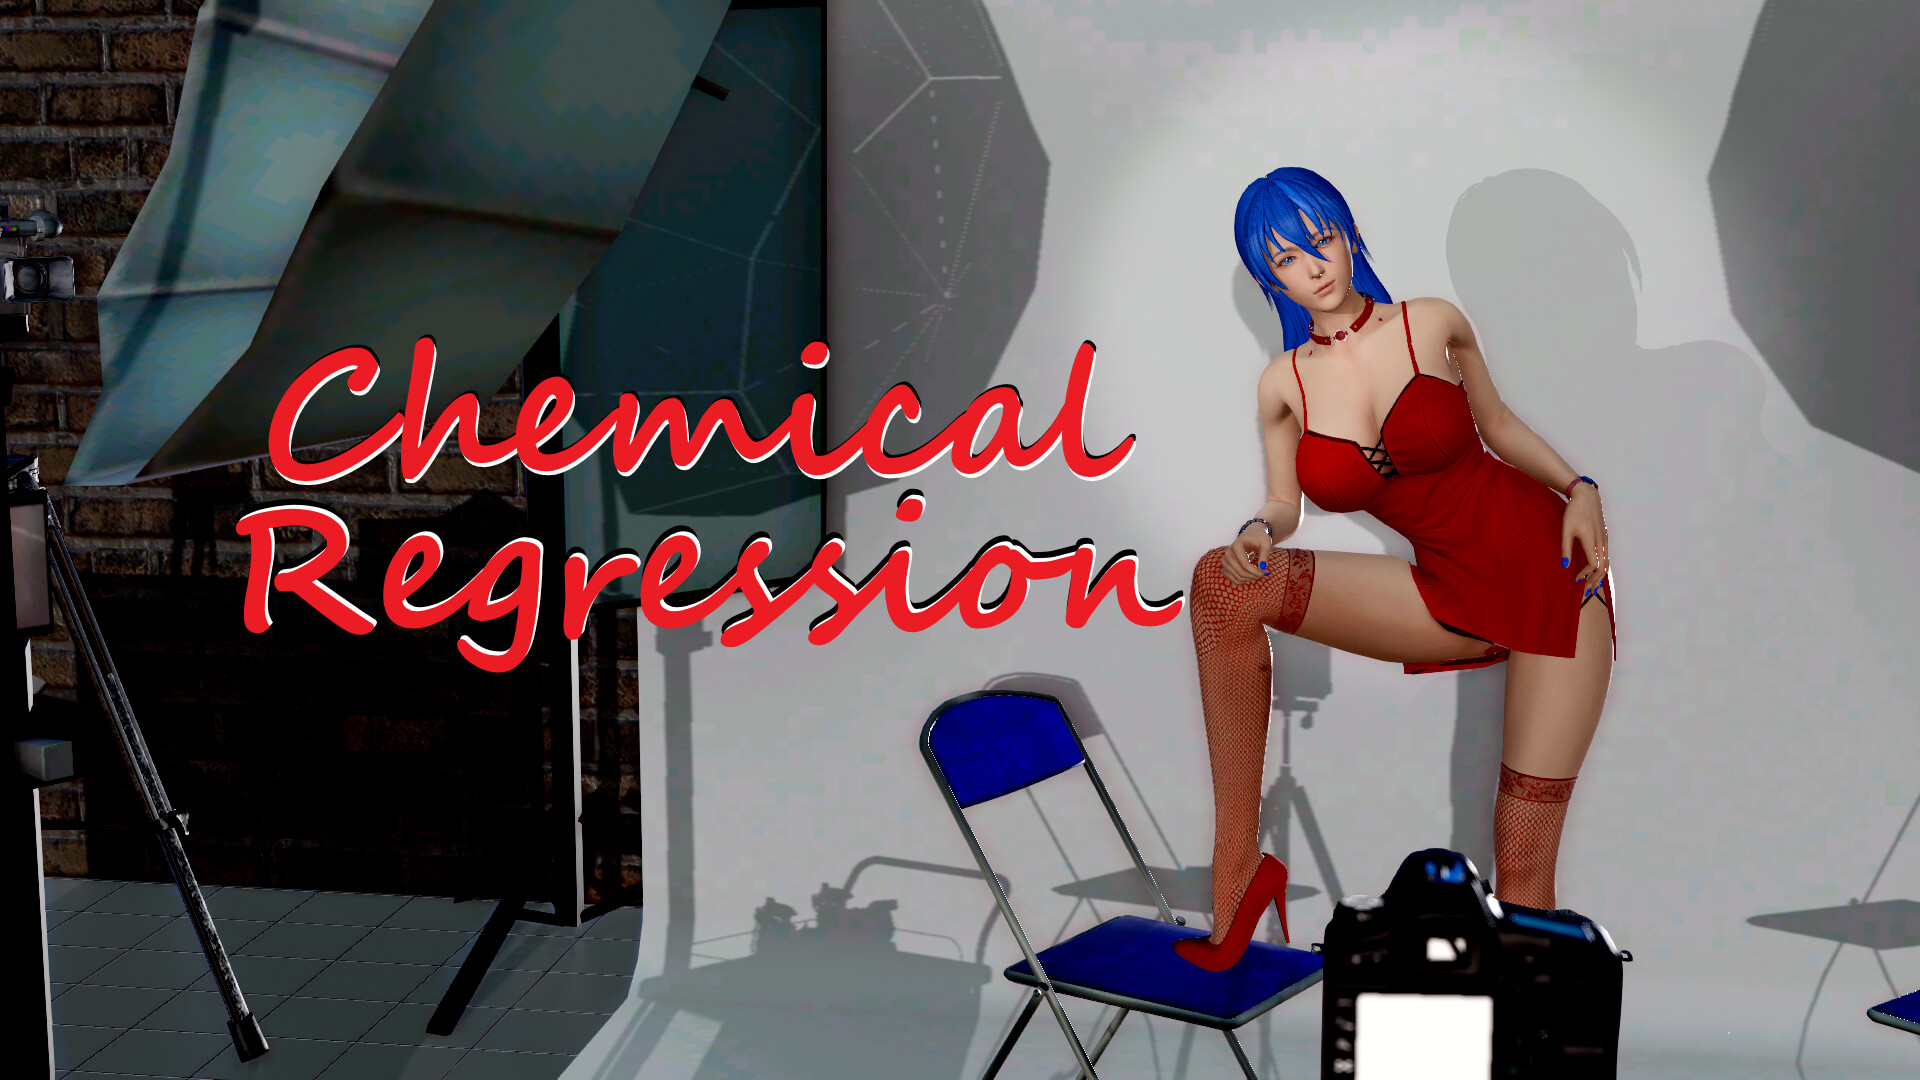 Chemical Regression Main Image